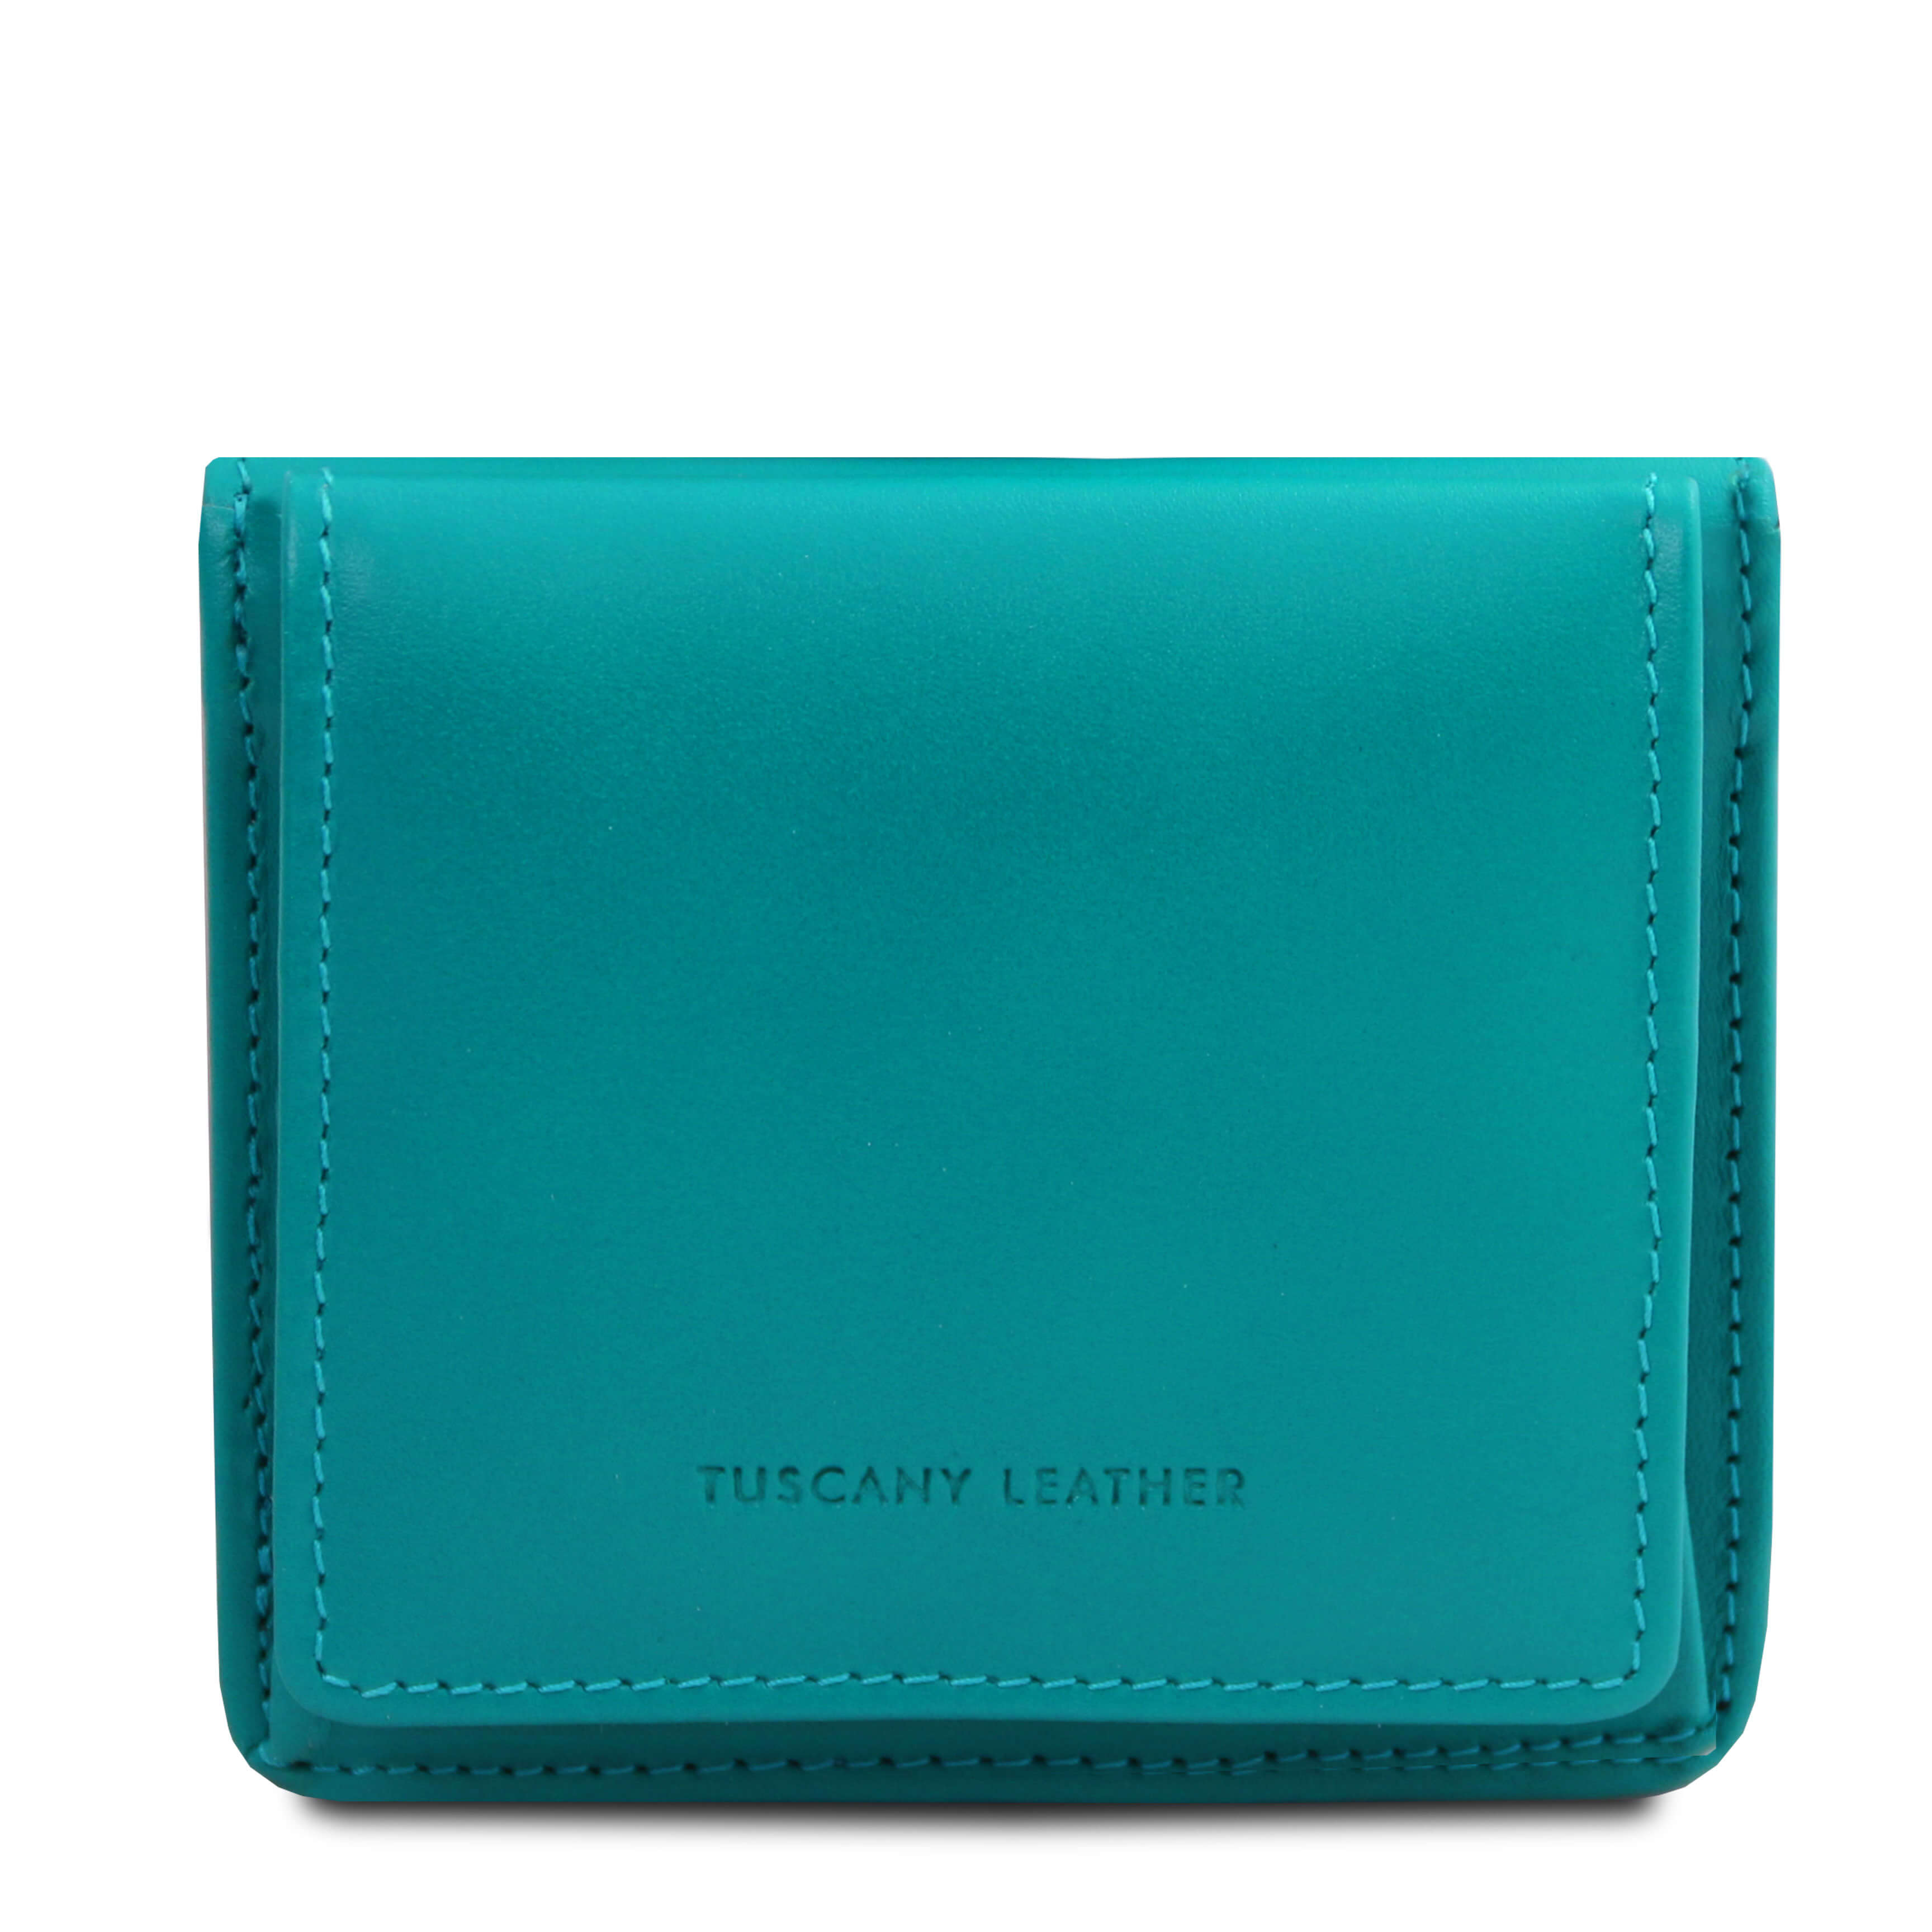 Tuscany Leather leren portemonnee TL142059 blauw